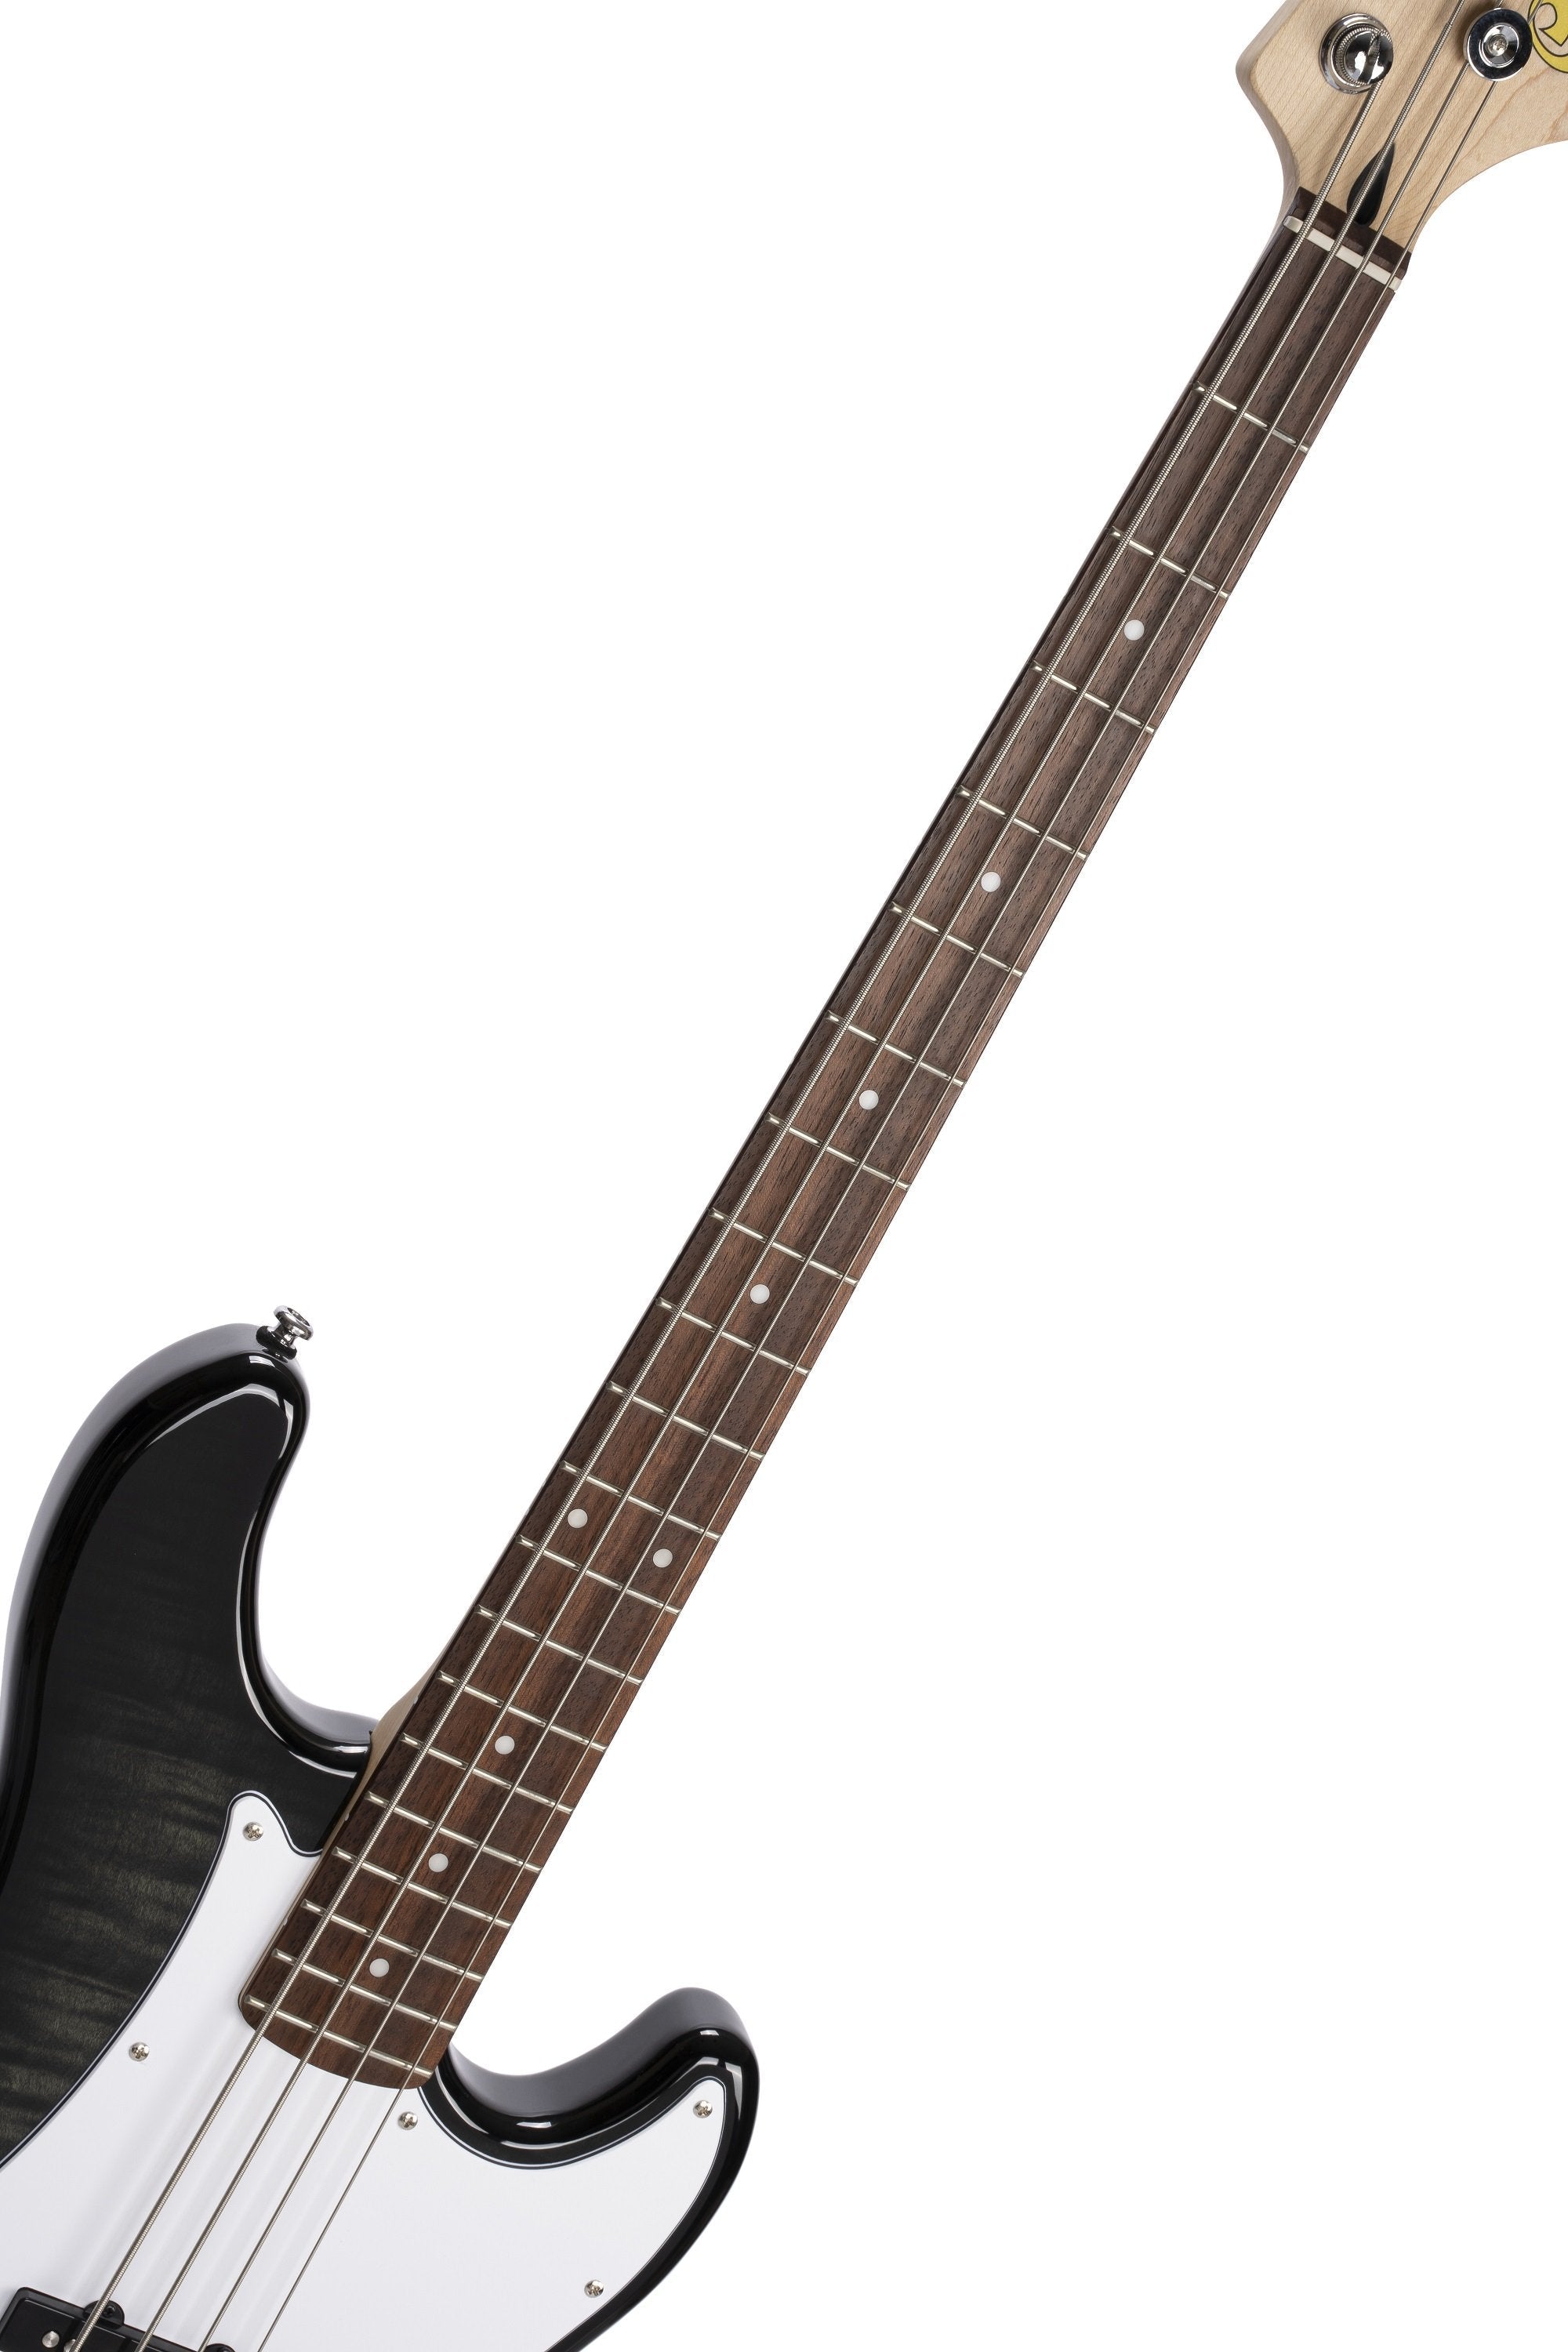 Cort GB24JJ Trans Black, Bass Guitar for sale at Richards Guitars.